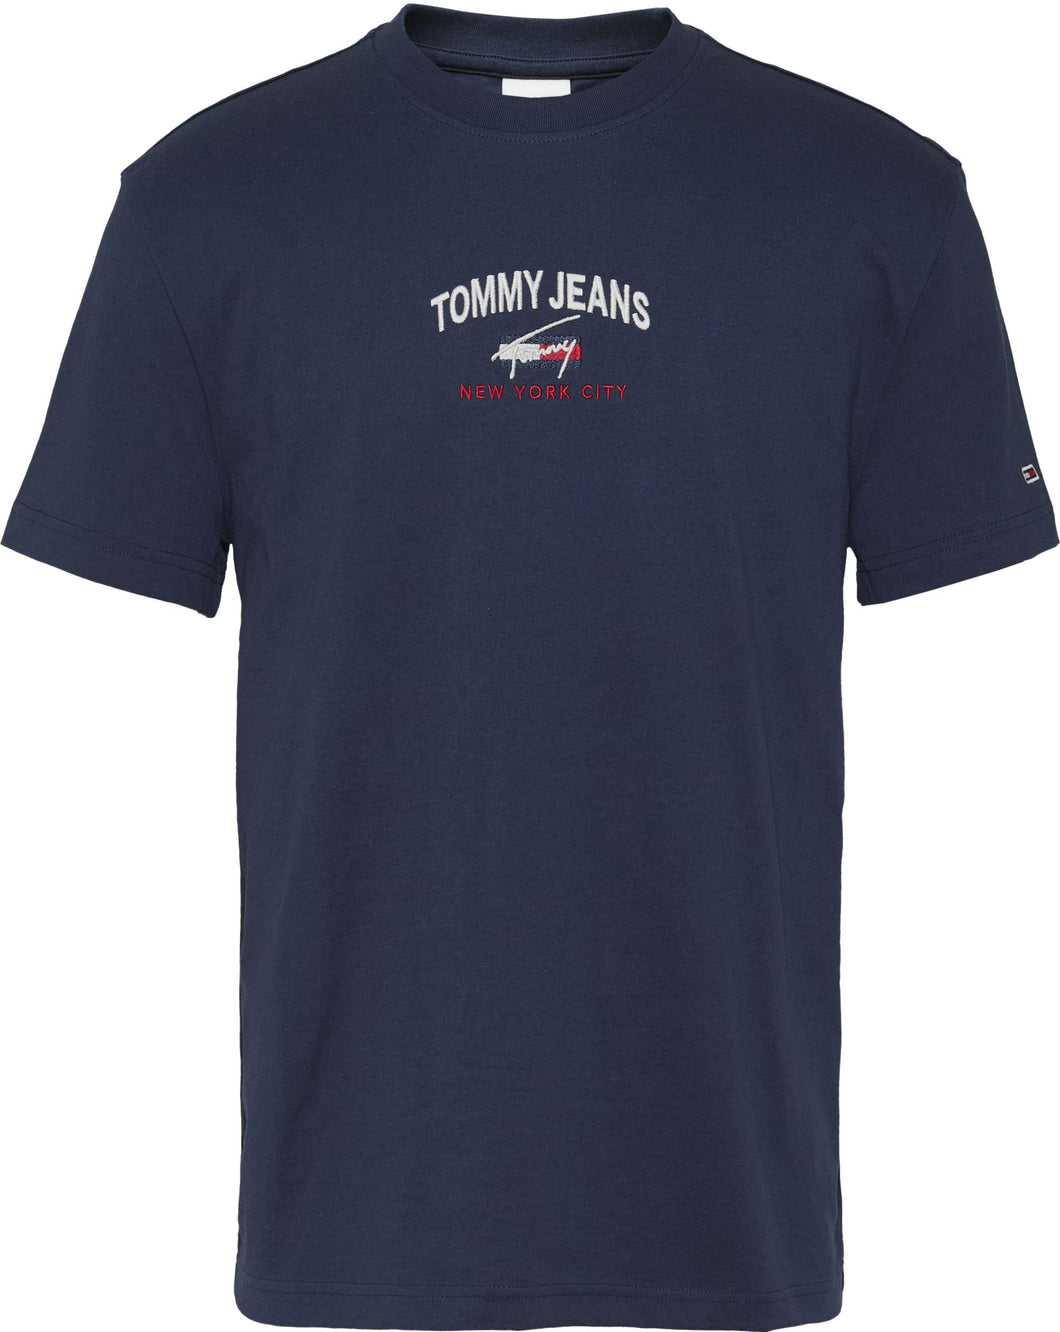 T-shirt Tommy Timeless navy